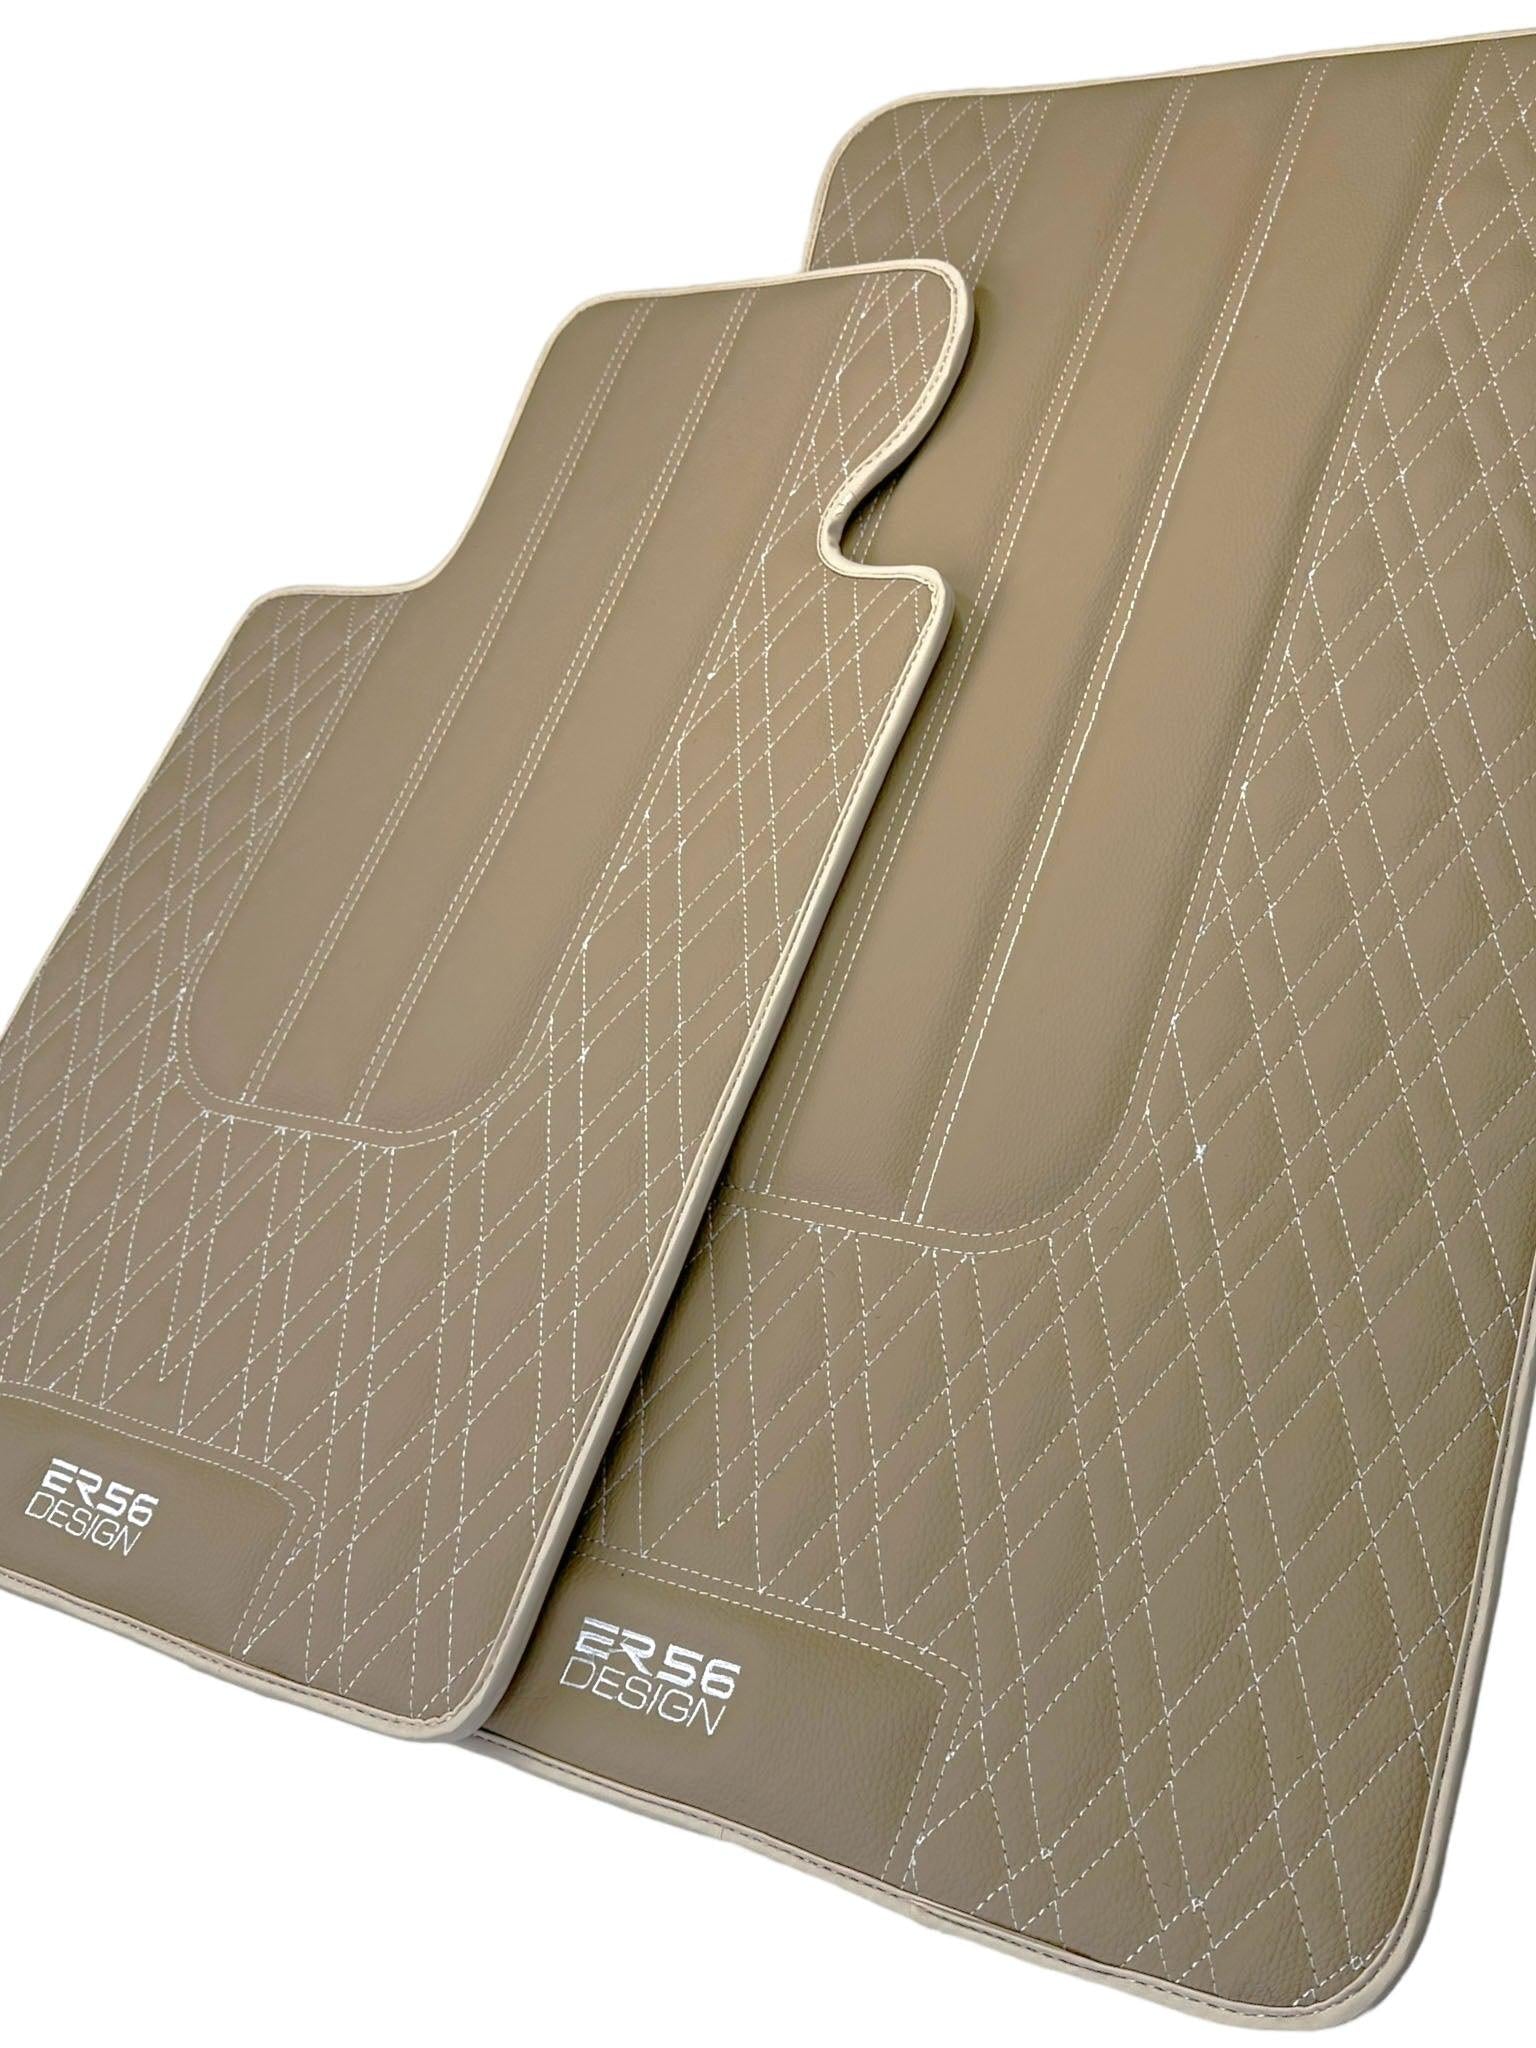 Beige Leather Floor Floor Mats For BMW 3 Series E93 | Fighter Jet Edition Brand |Sky Blue Trim